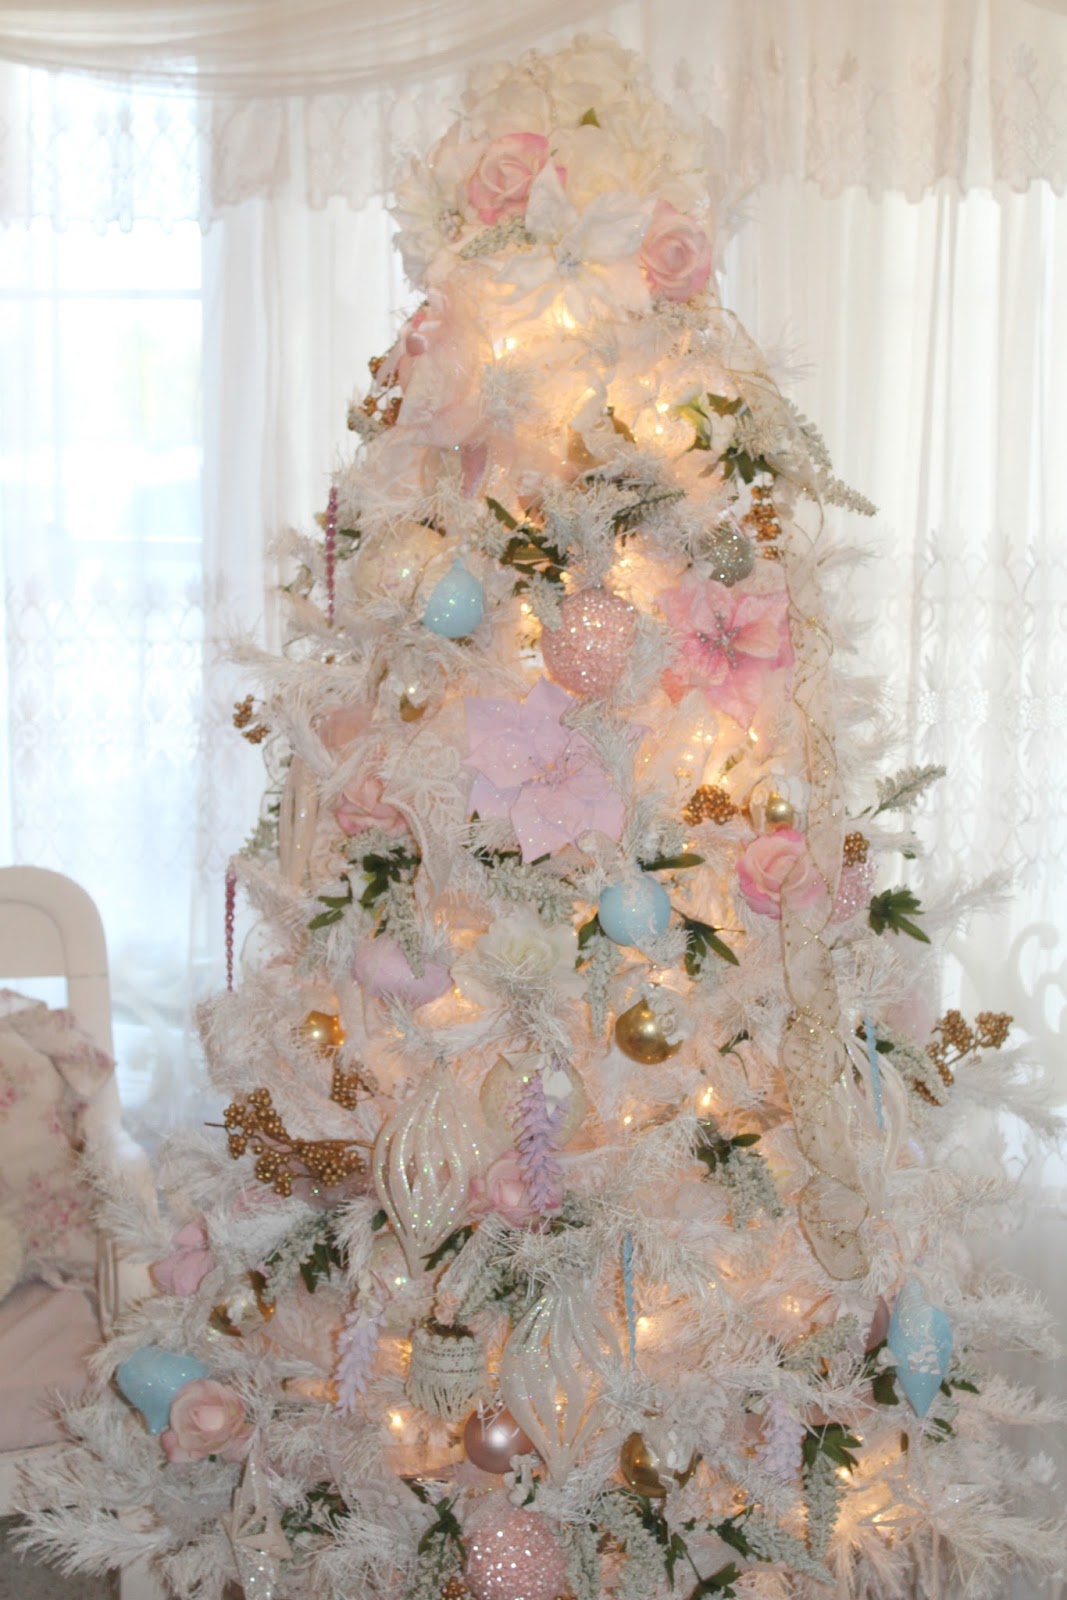 Olivia's Romantic Home: Inexpensive White Christmas Tree 